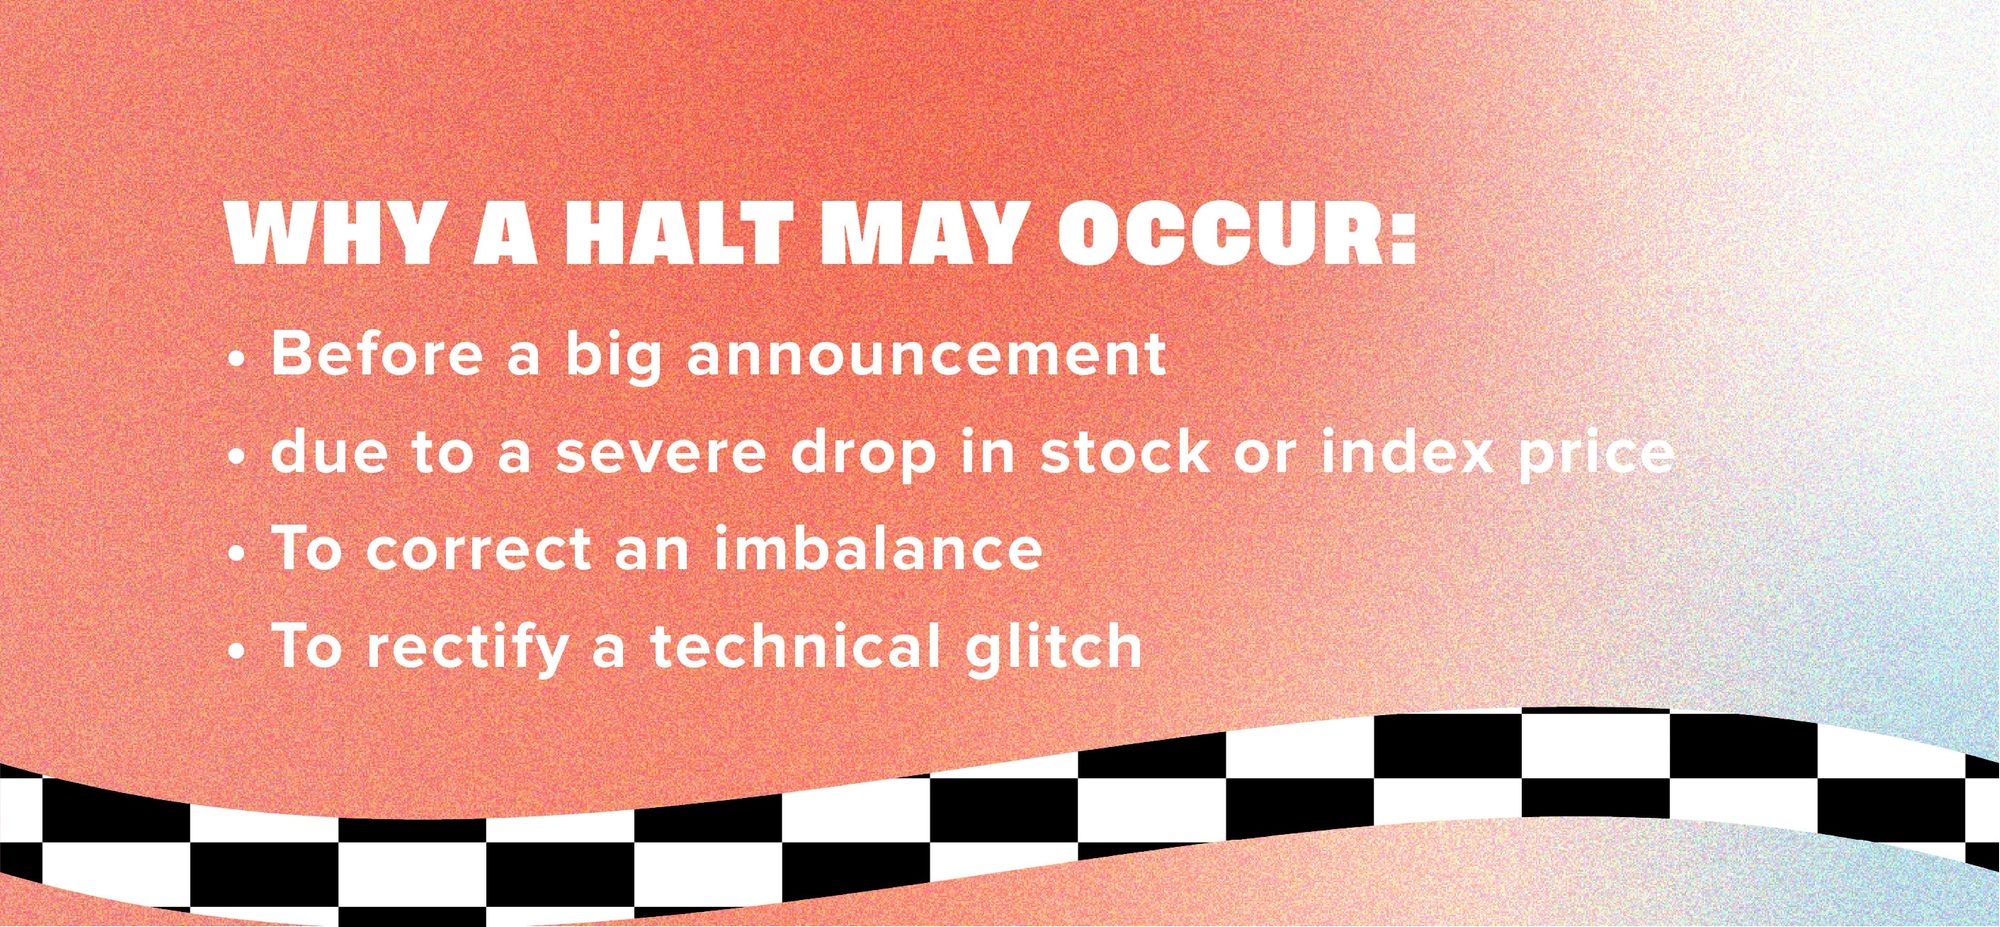 Why a halt may occur